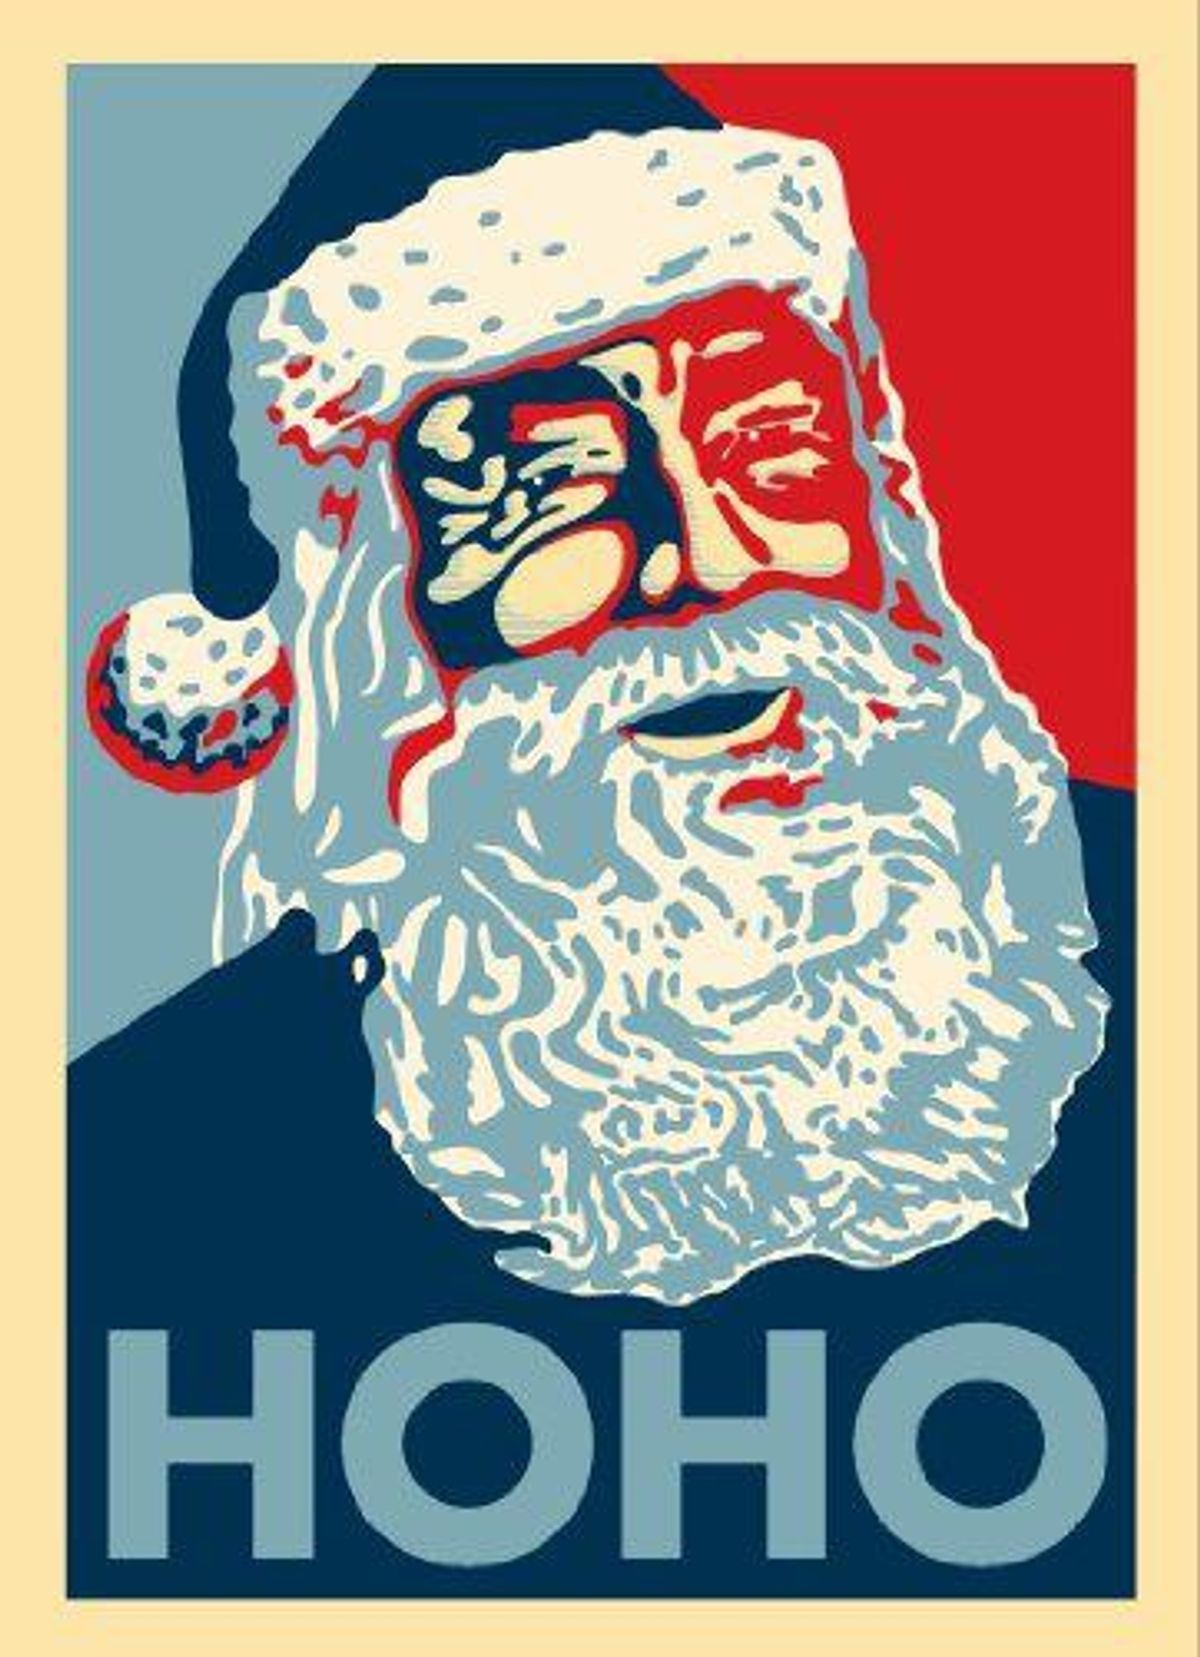 If Santa Were President